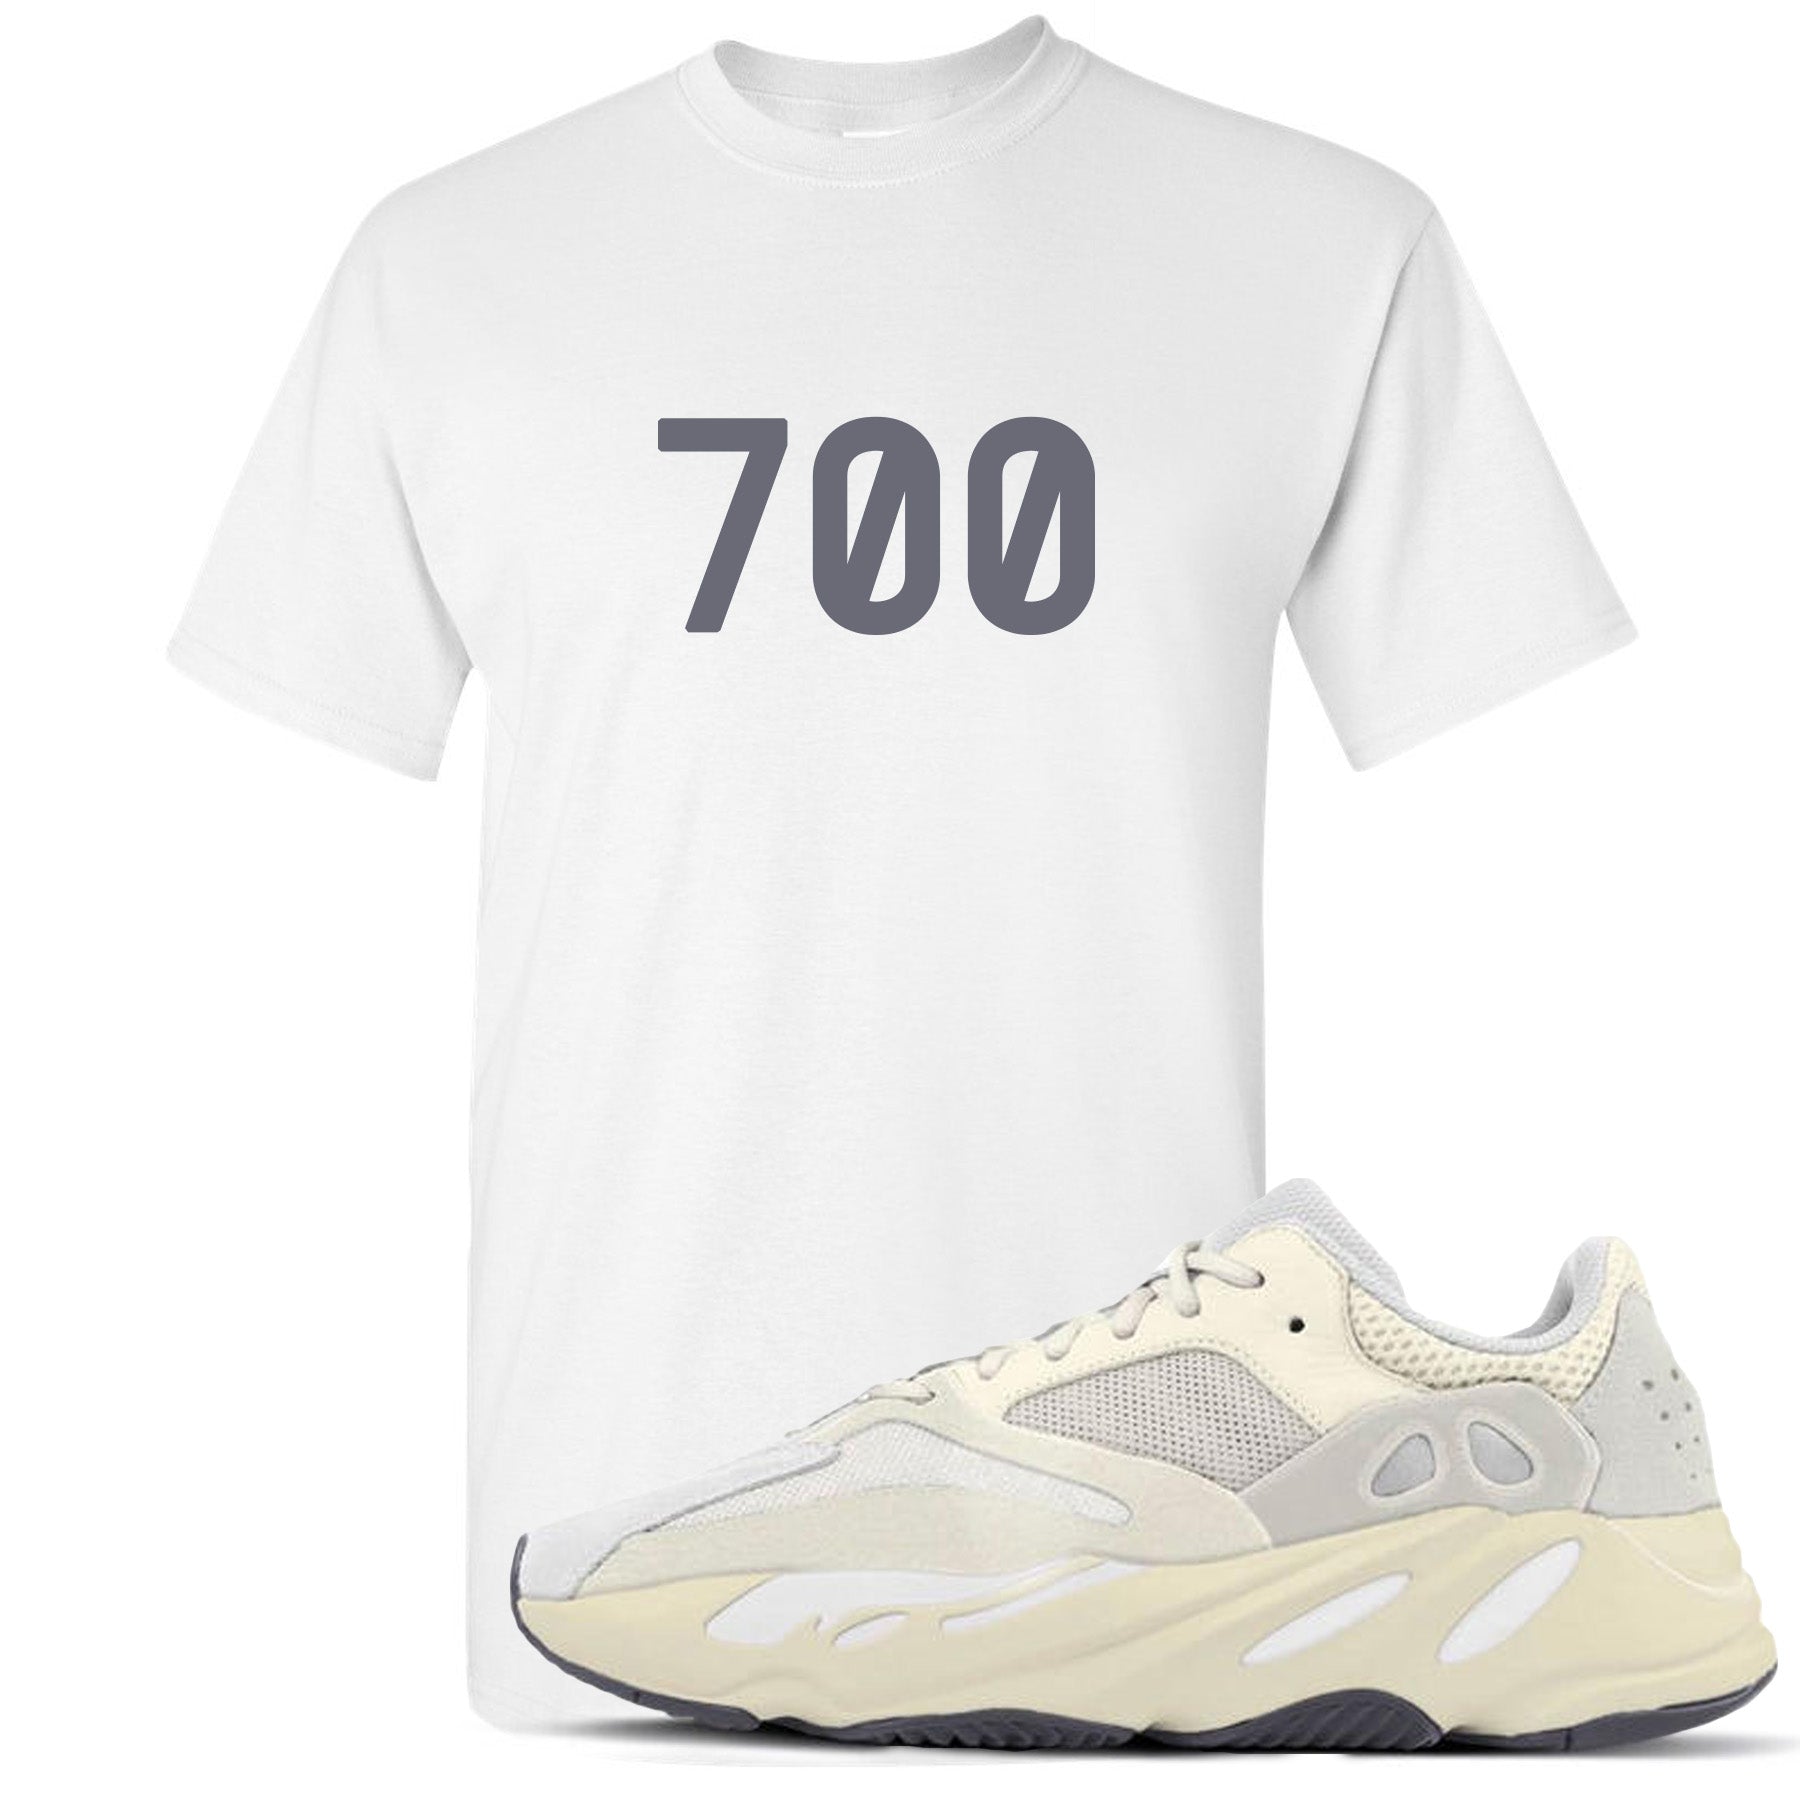 yeezy 700 matching shirt